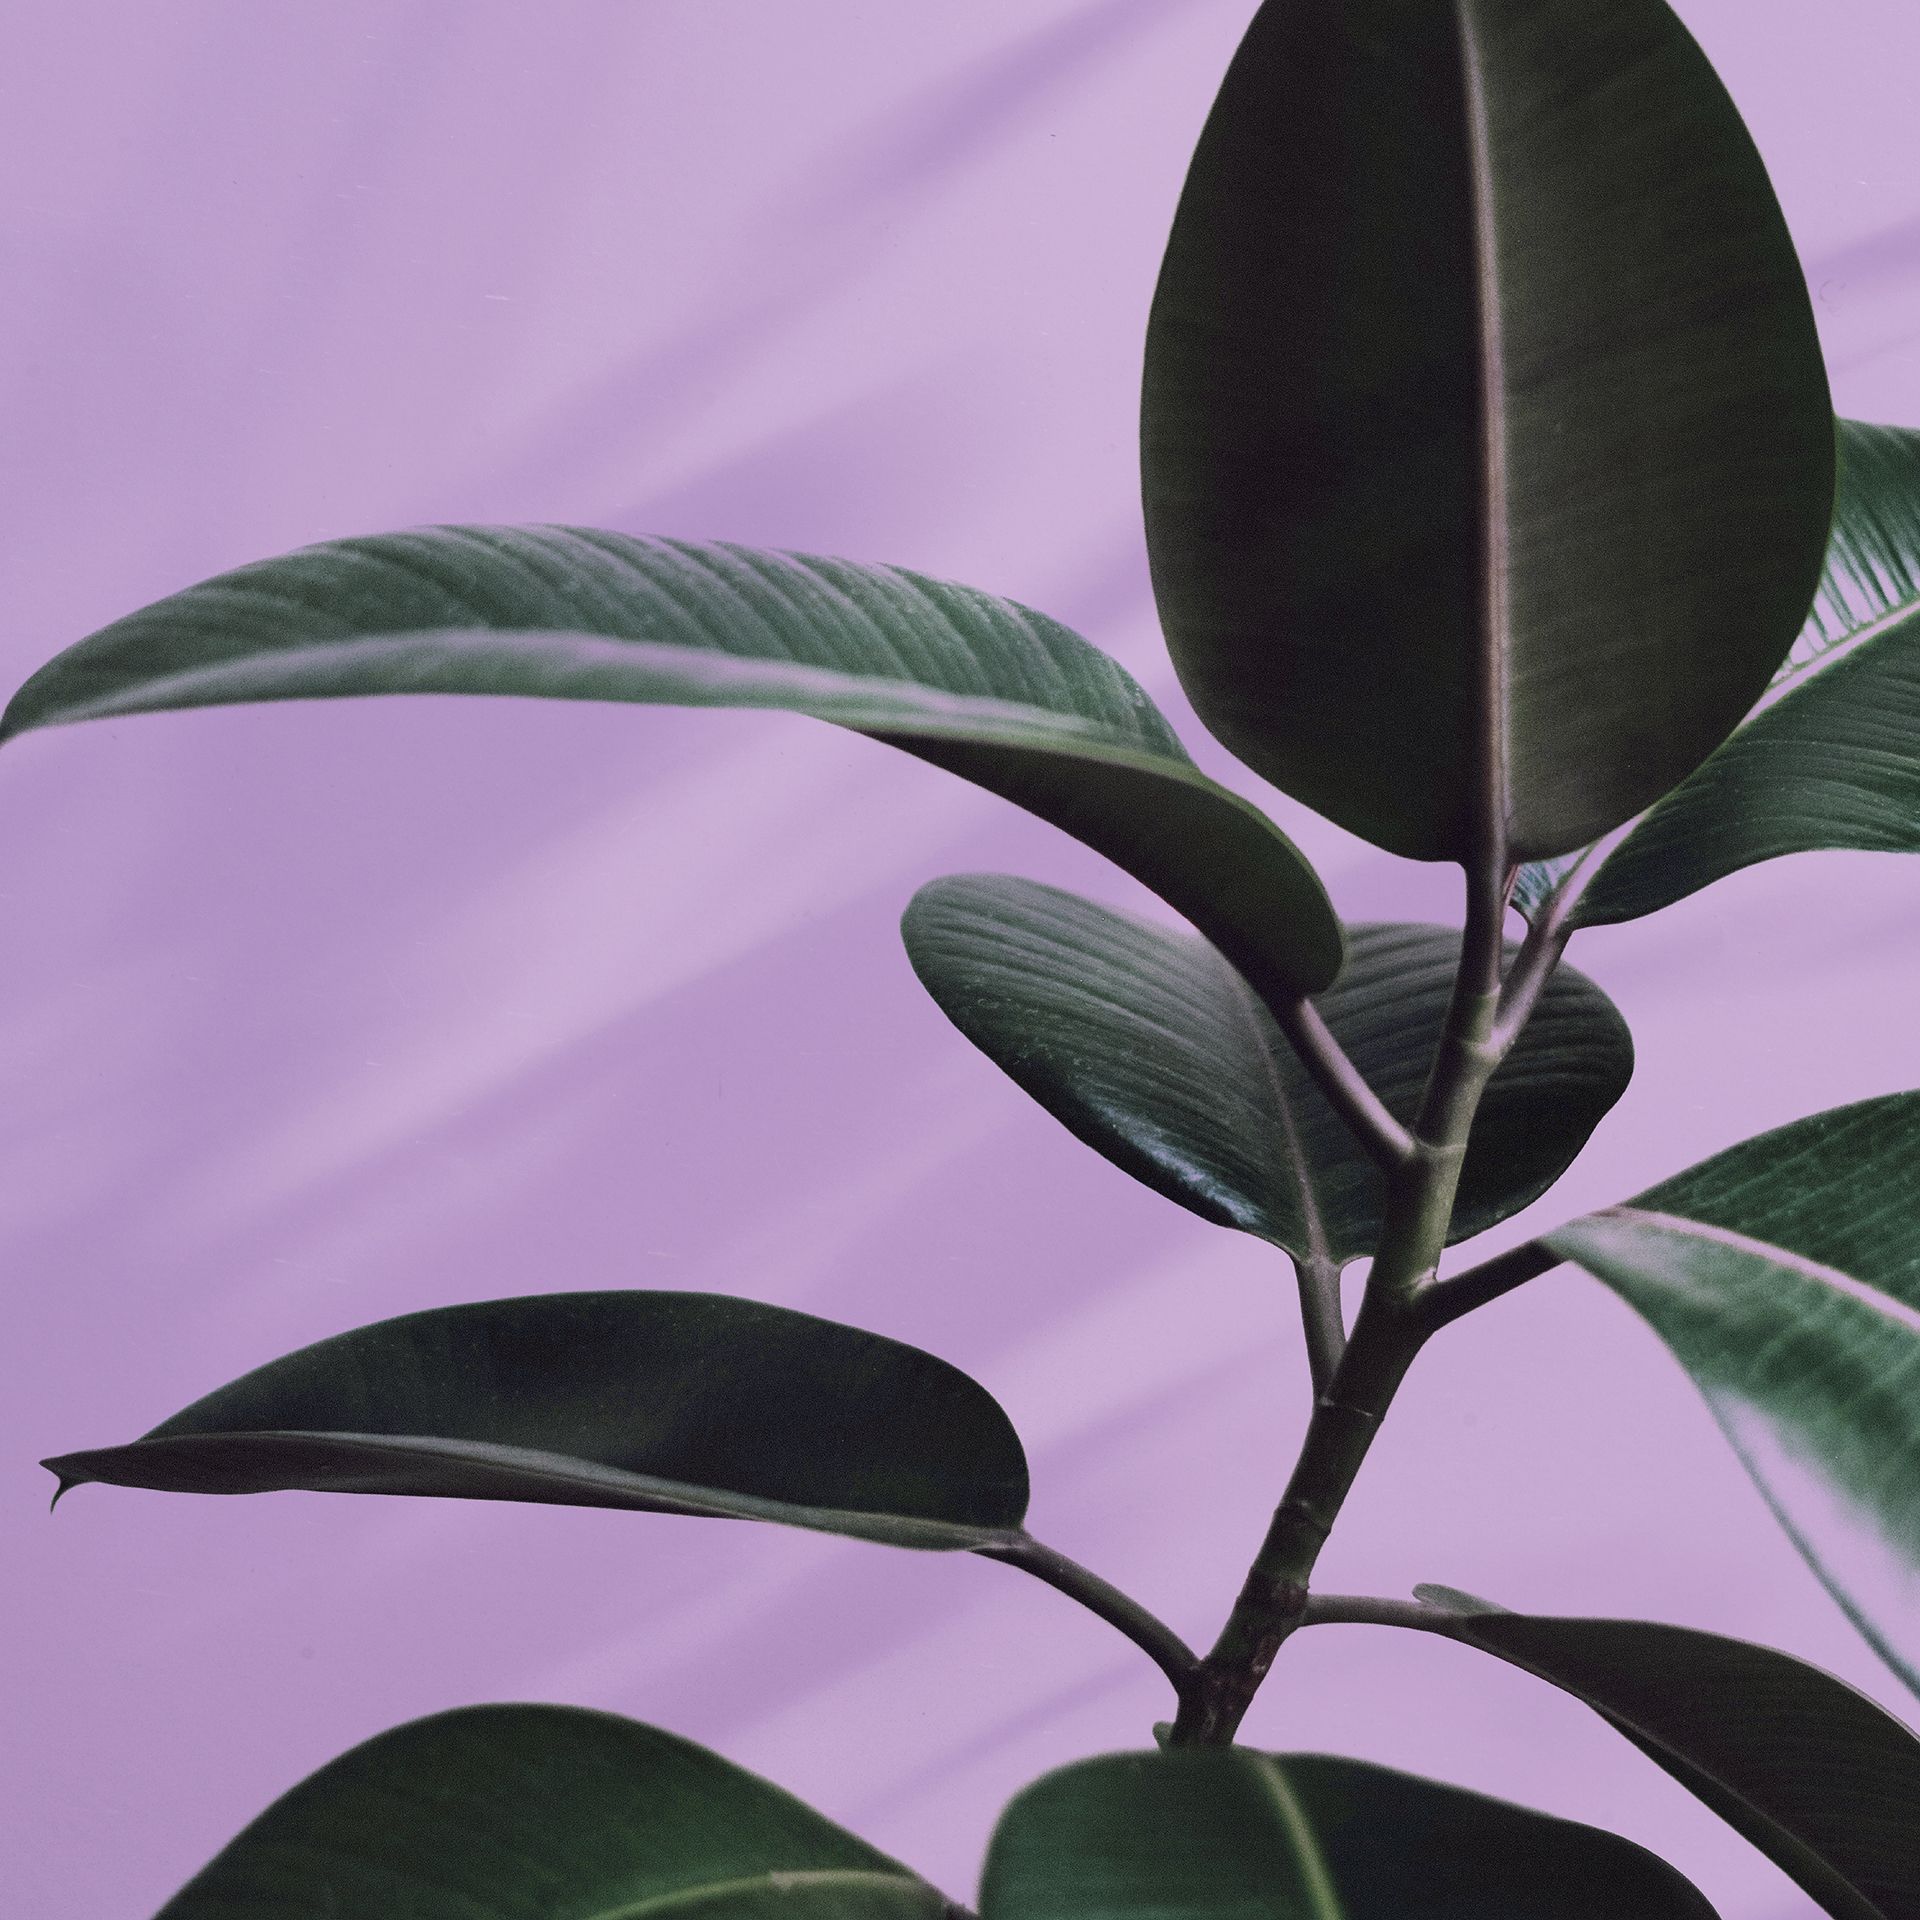 rubber plant against a purple background